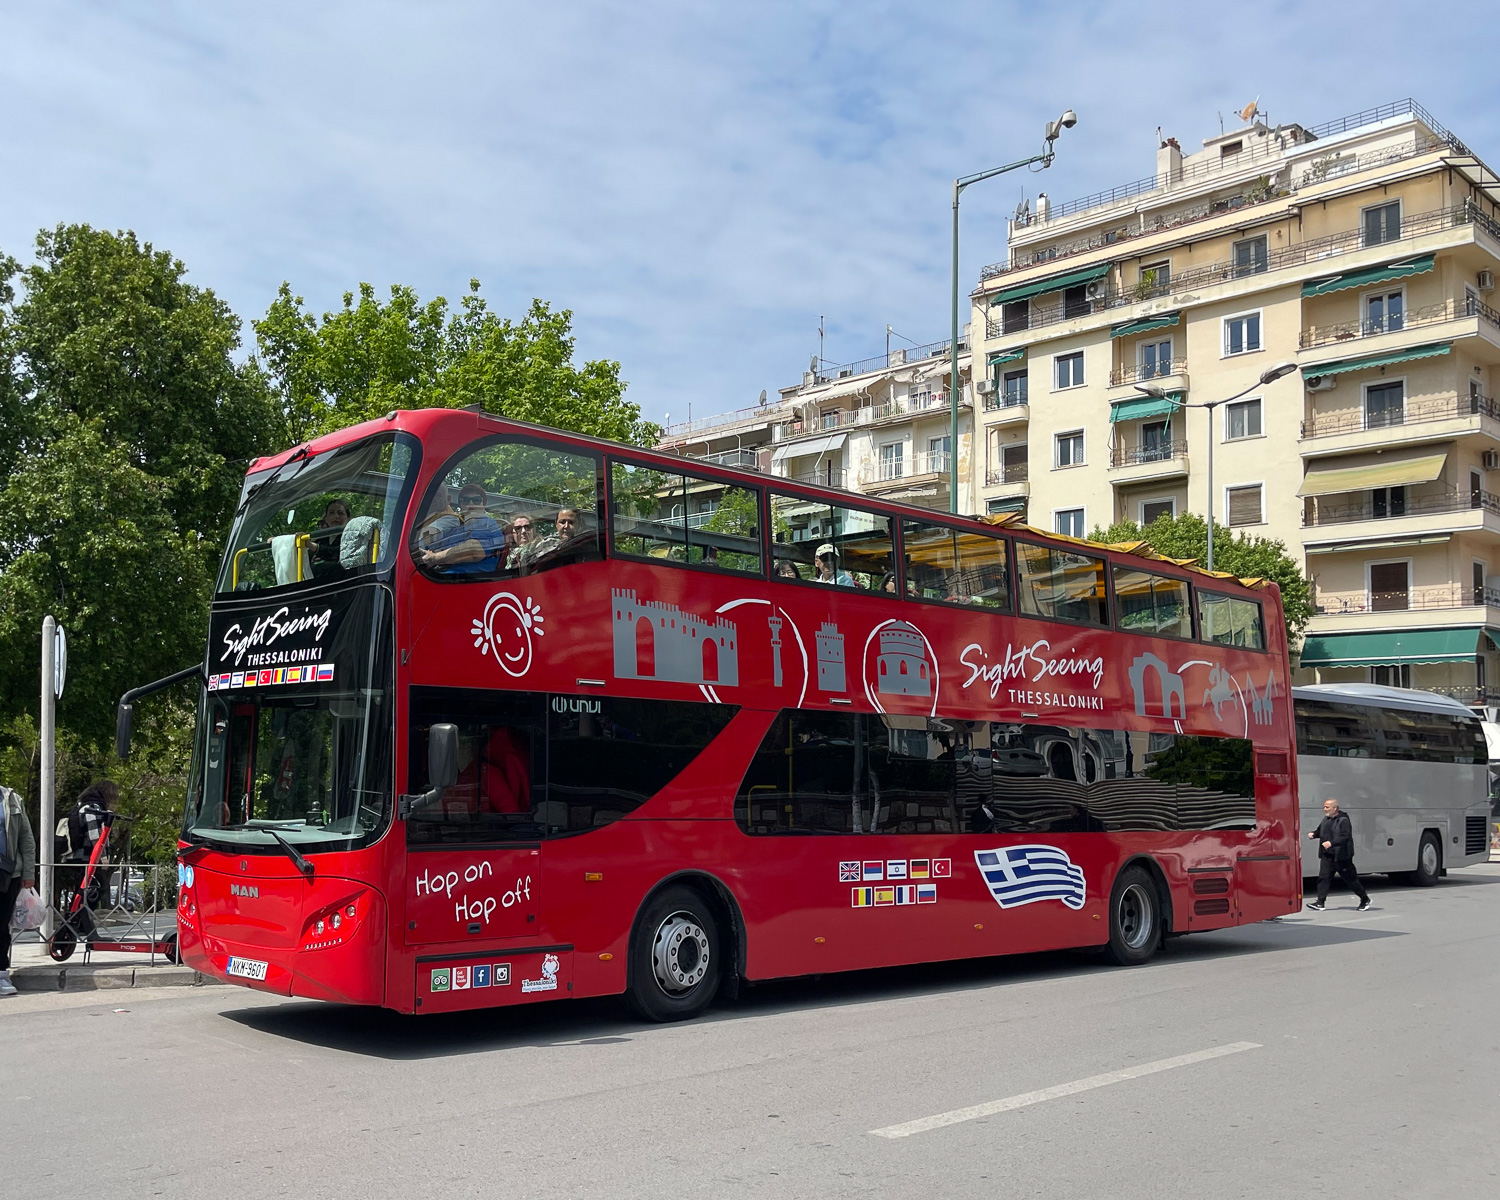 Hop on hop off bus in Thessaloniki Greece Photo_ Heatheronhertravels.com